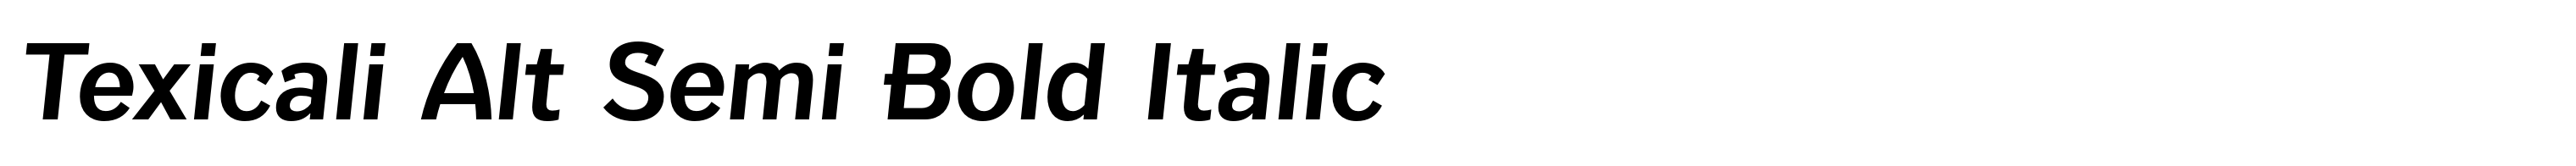 Texicali Alt Semi Bold Italic